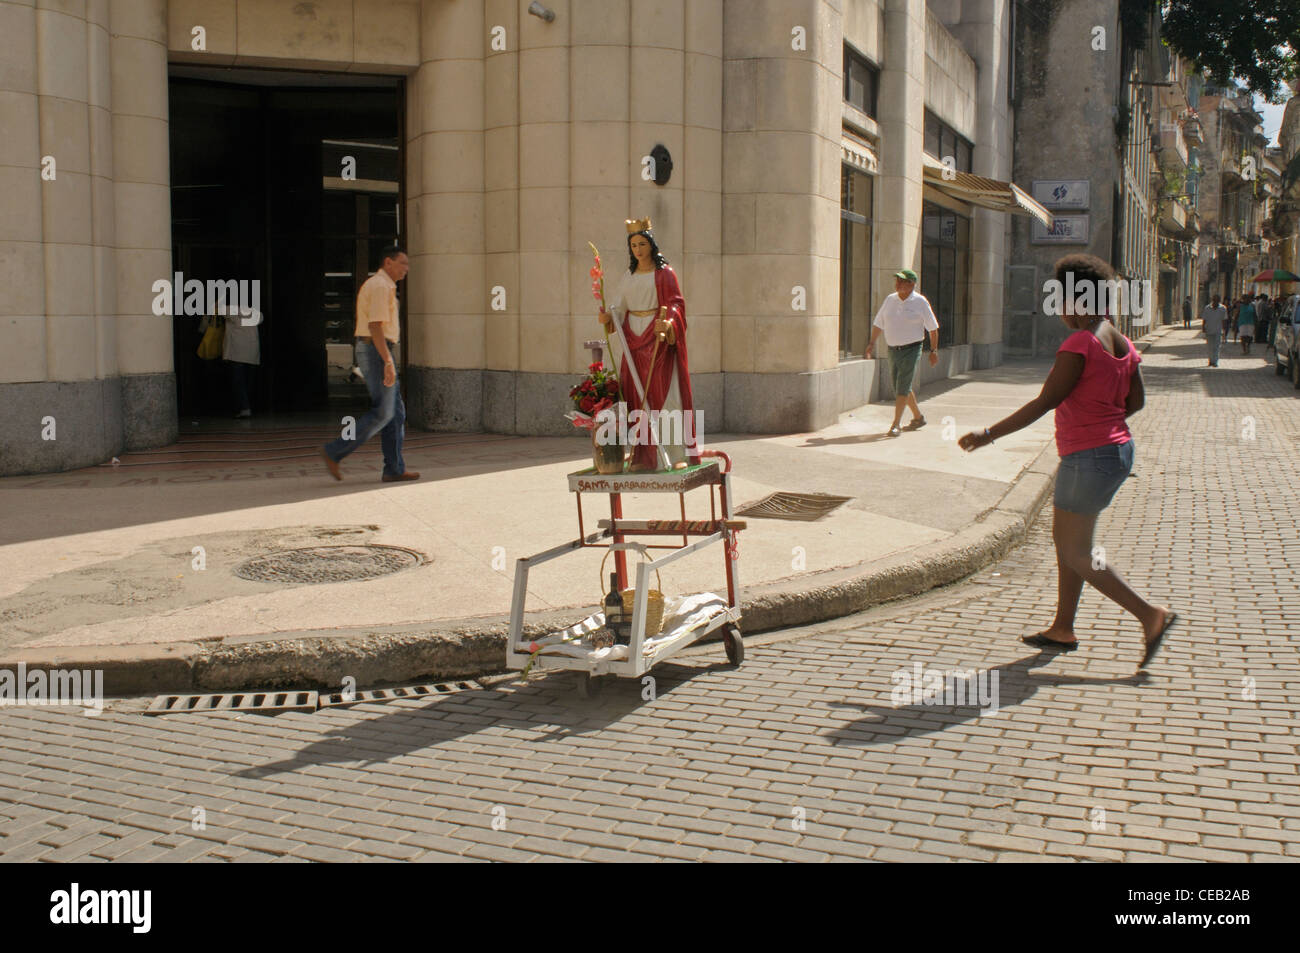 Religious statue in a street of Havana, Cuba Stock Photo